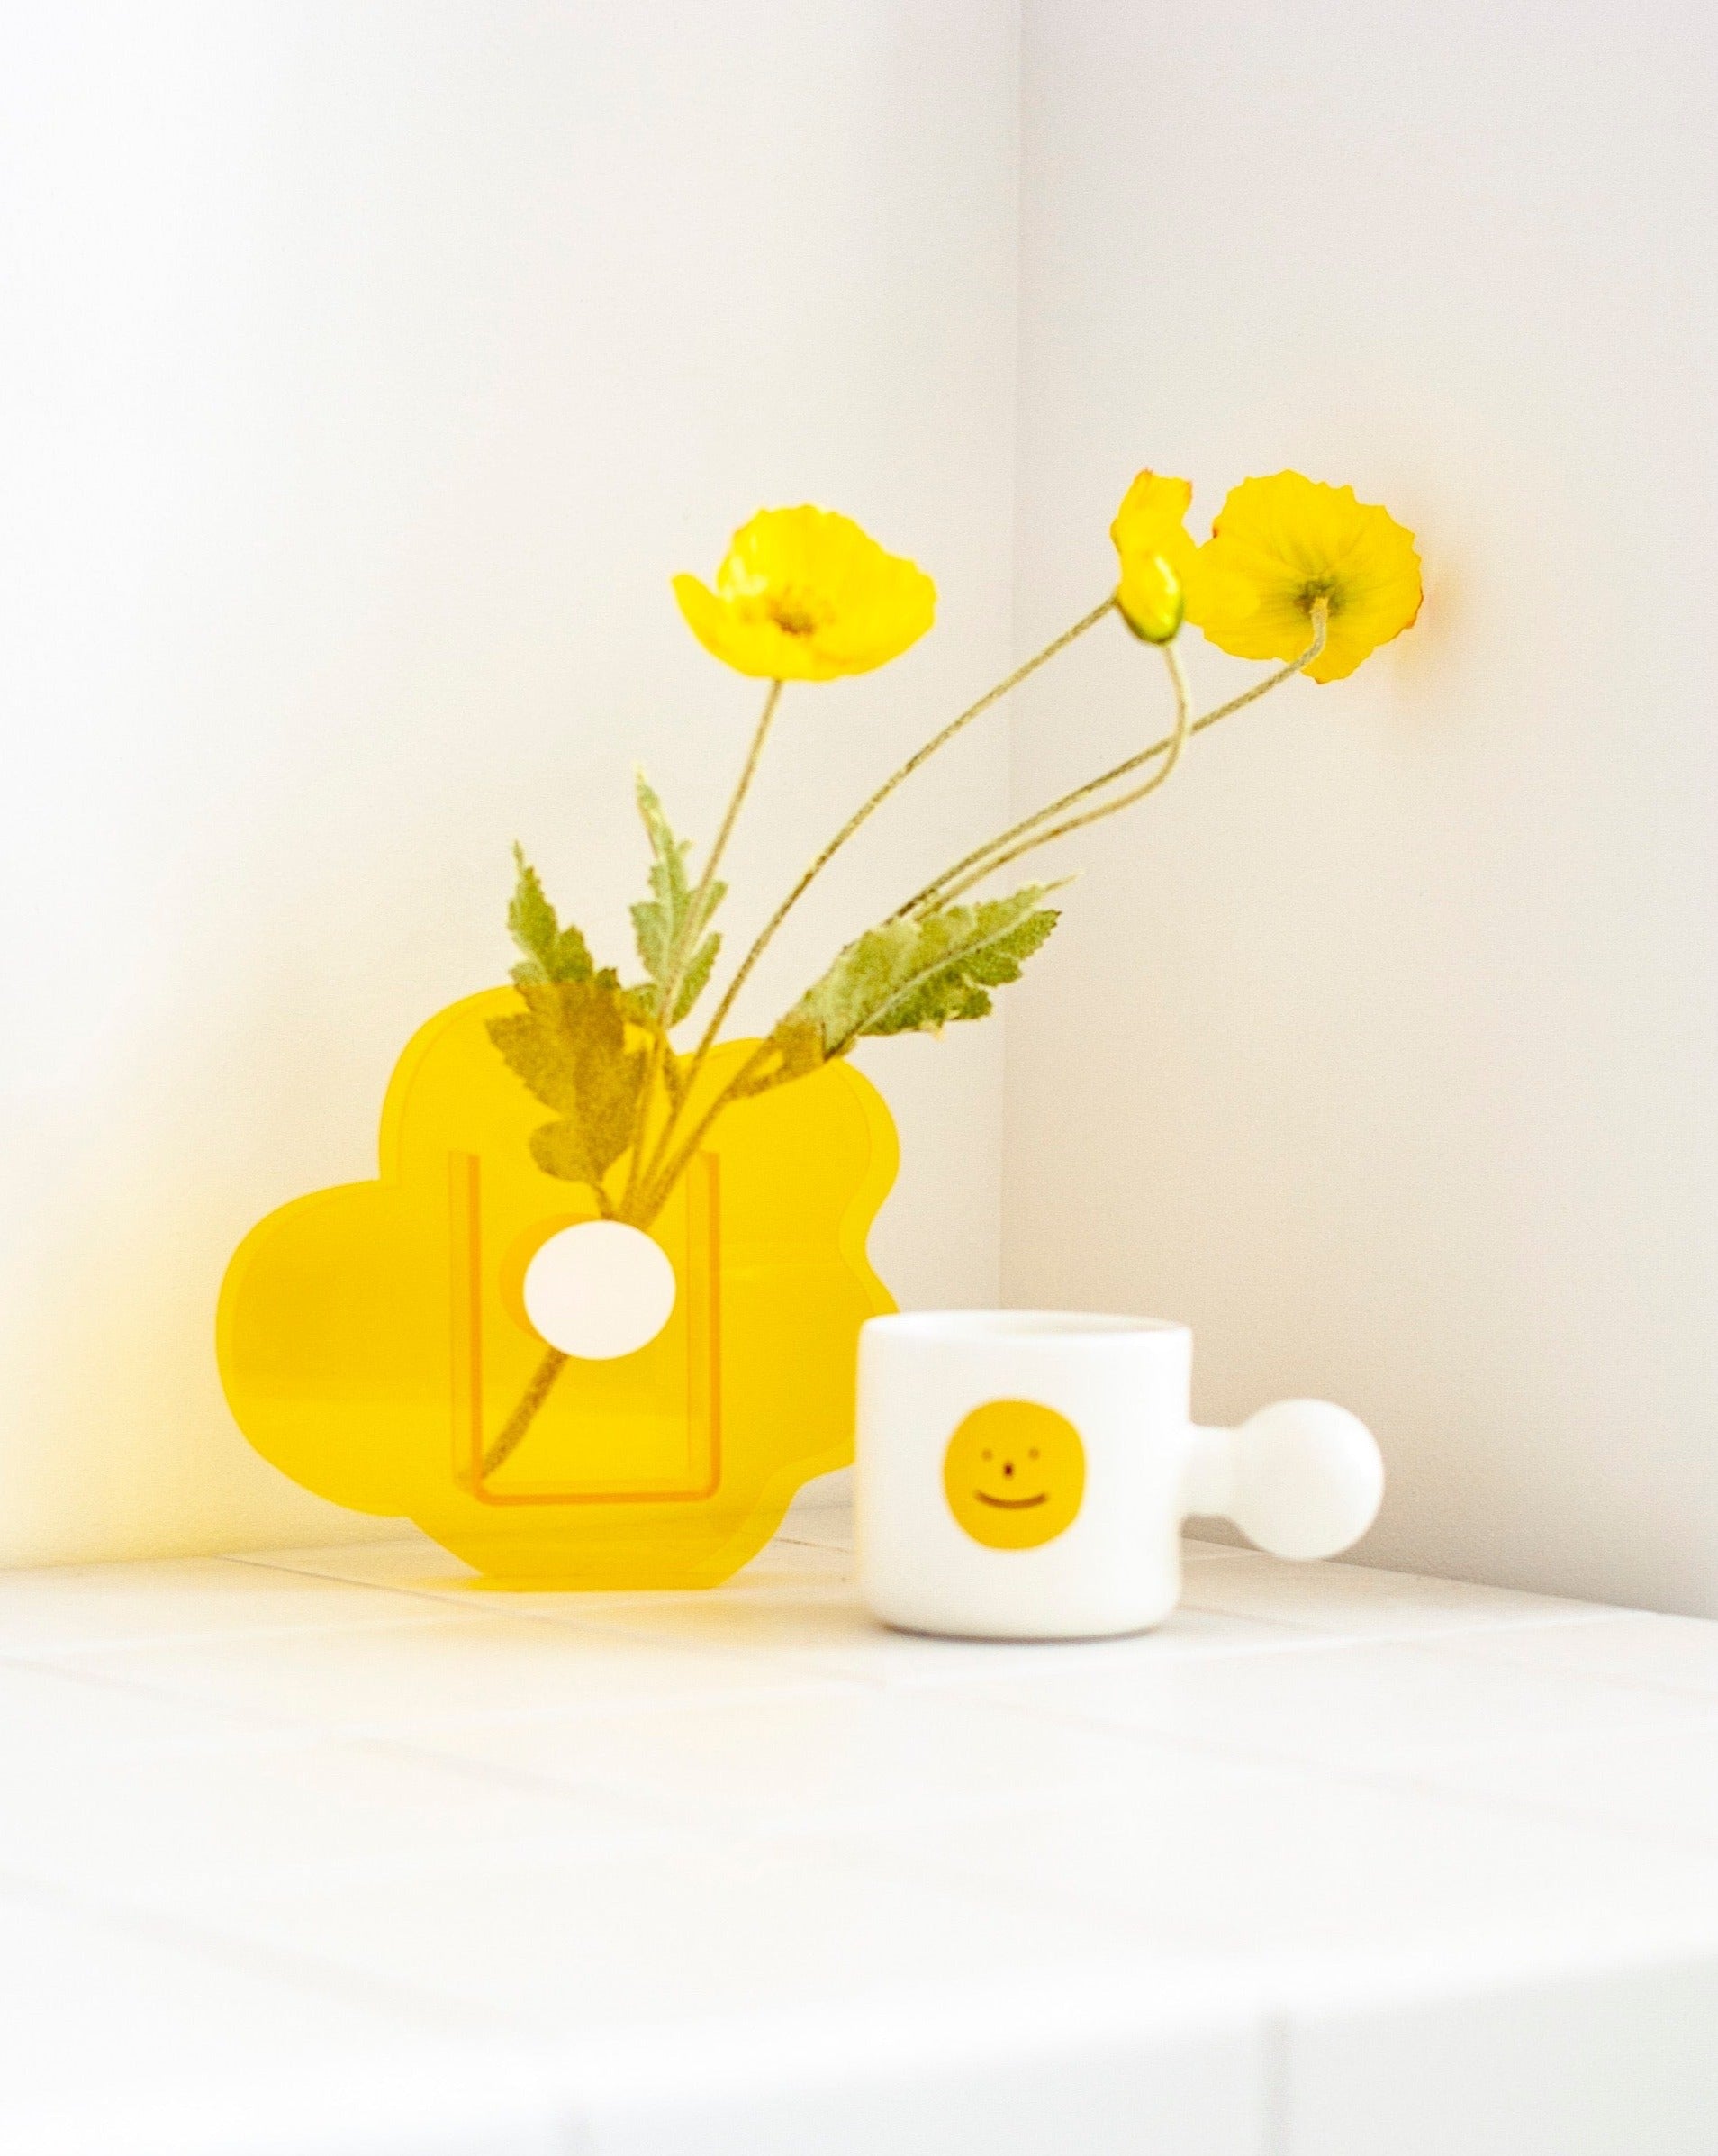 Creative Acrylic Decorative Flower Vase | Modern Home Decor - Floral Acrylic Decor Vase - Yellow Flower - INSPECIAL HOME